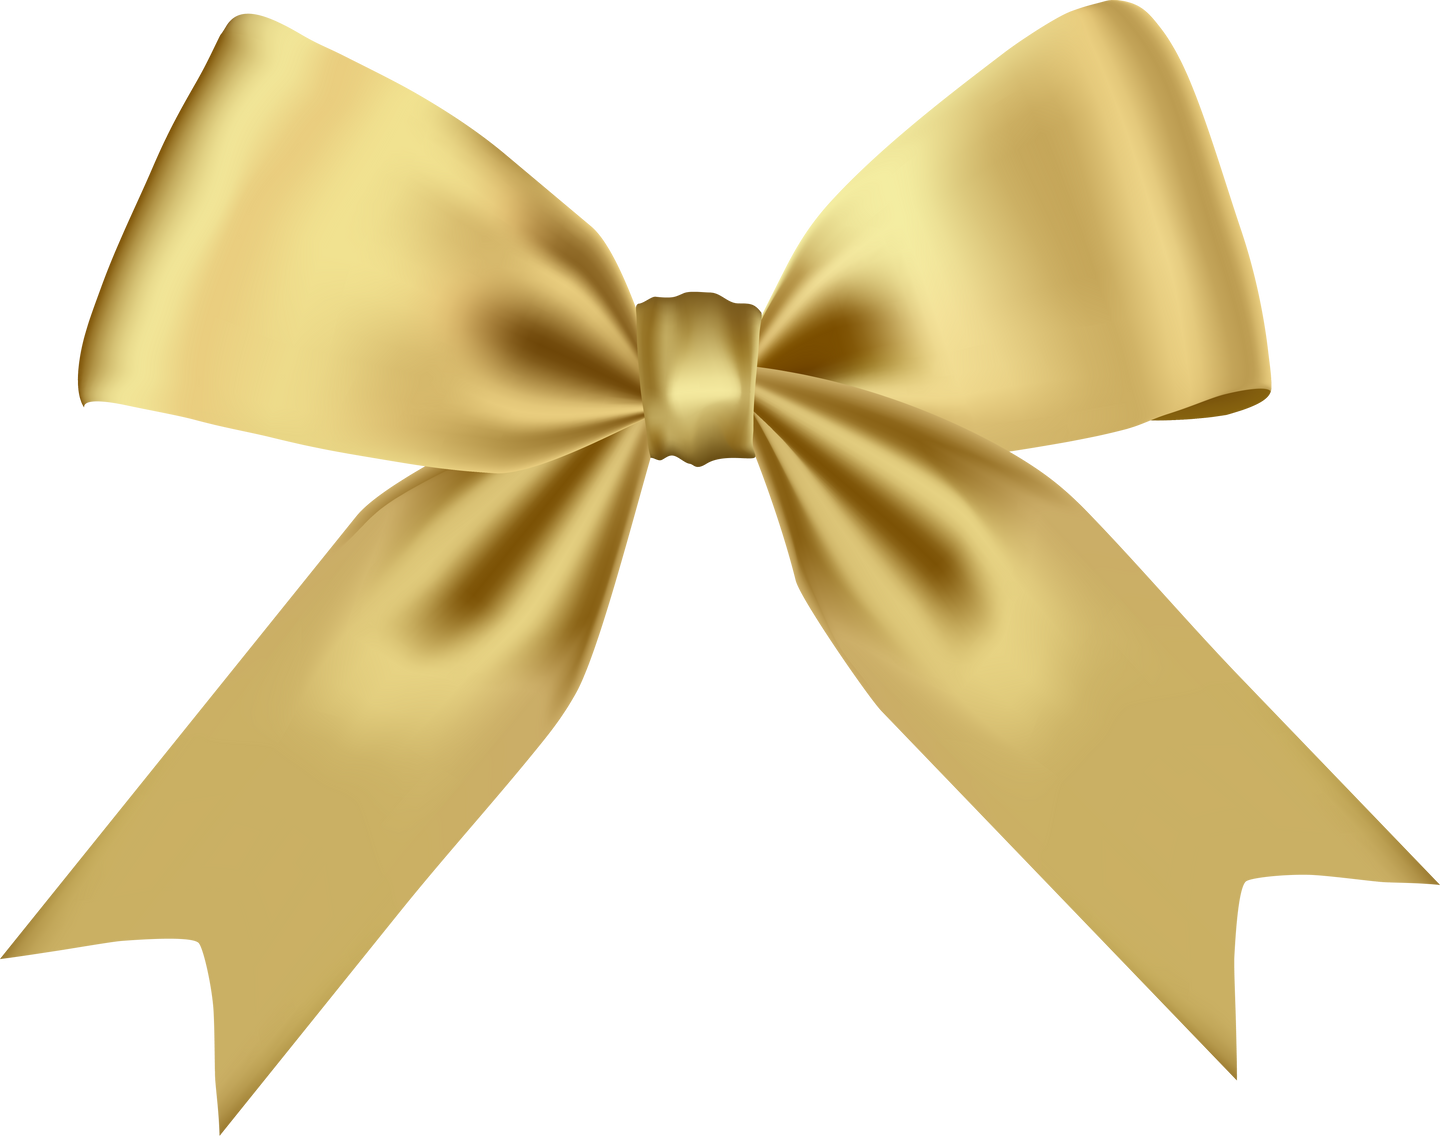 Ribbon Bow gold color.